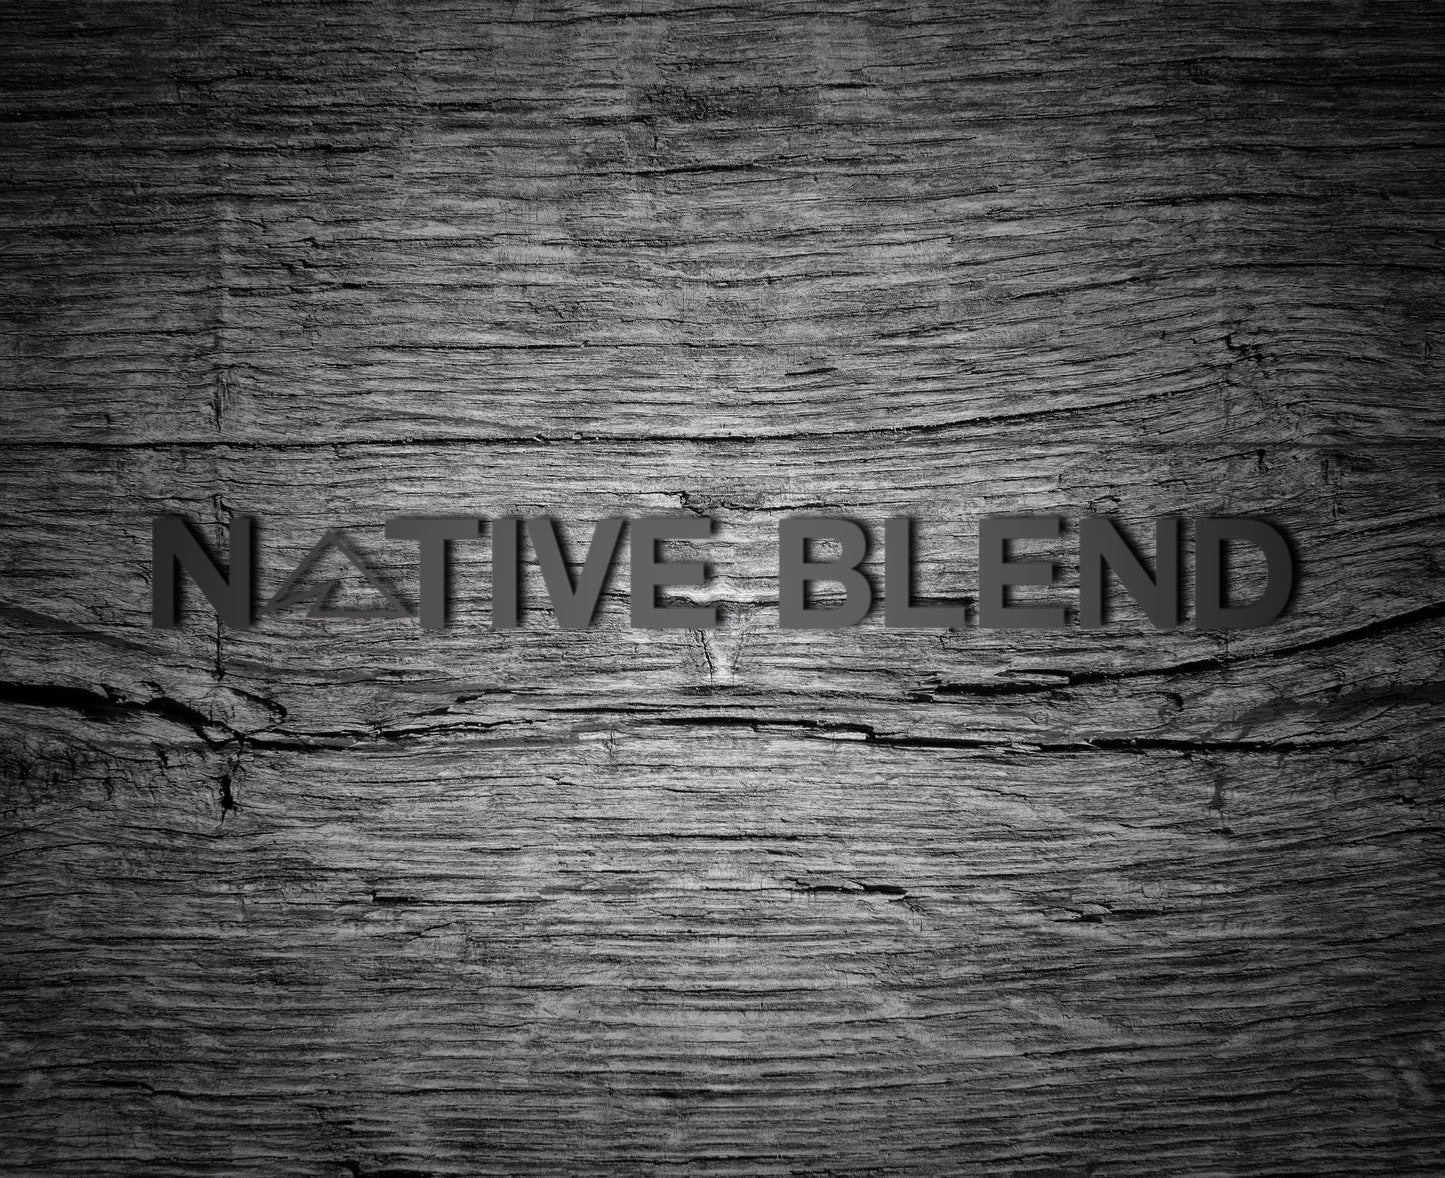 12” Native Blend Die Cut Decal